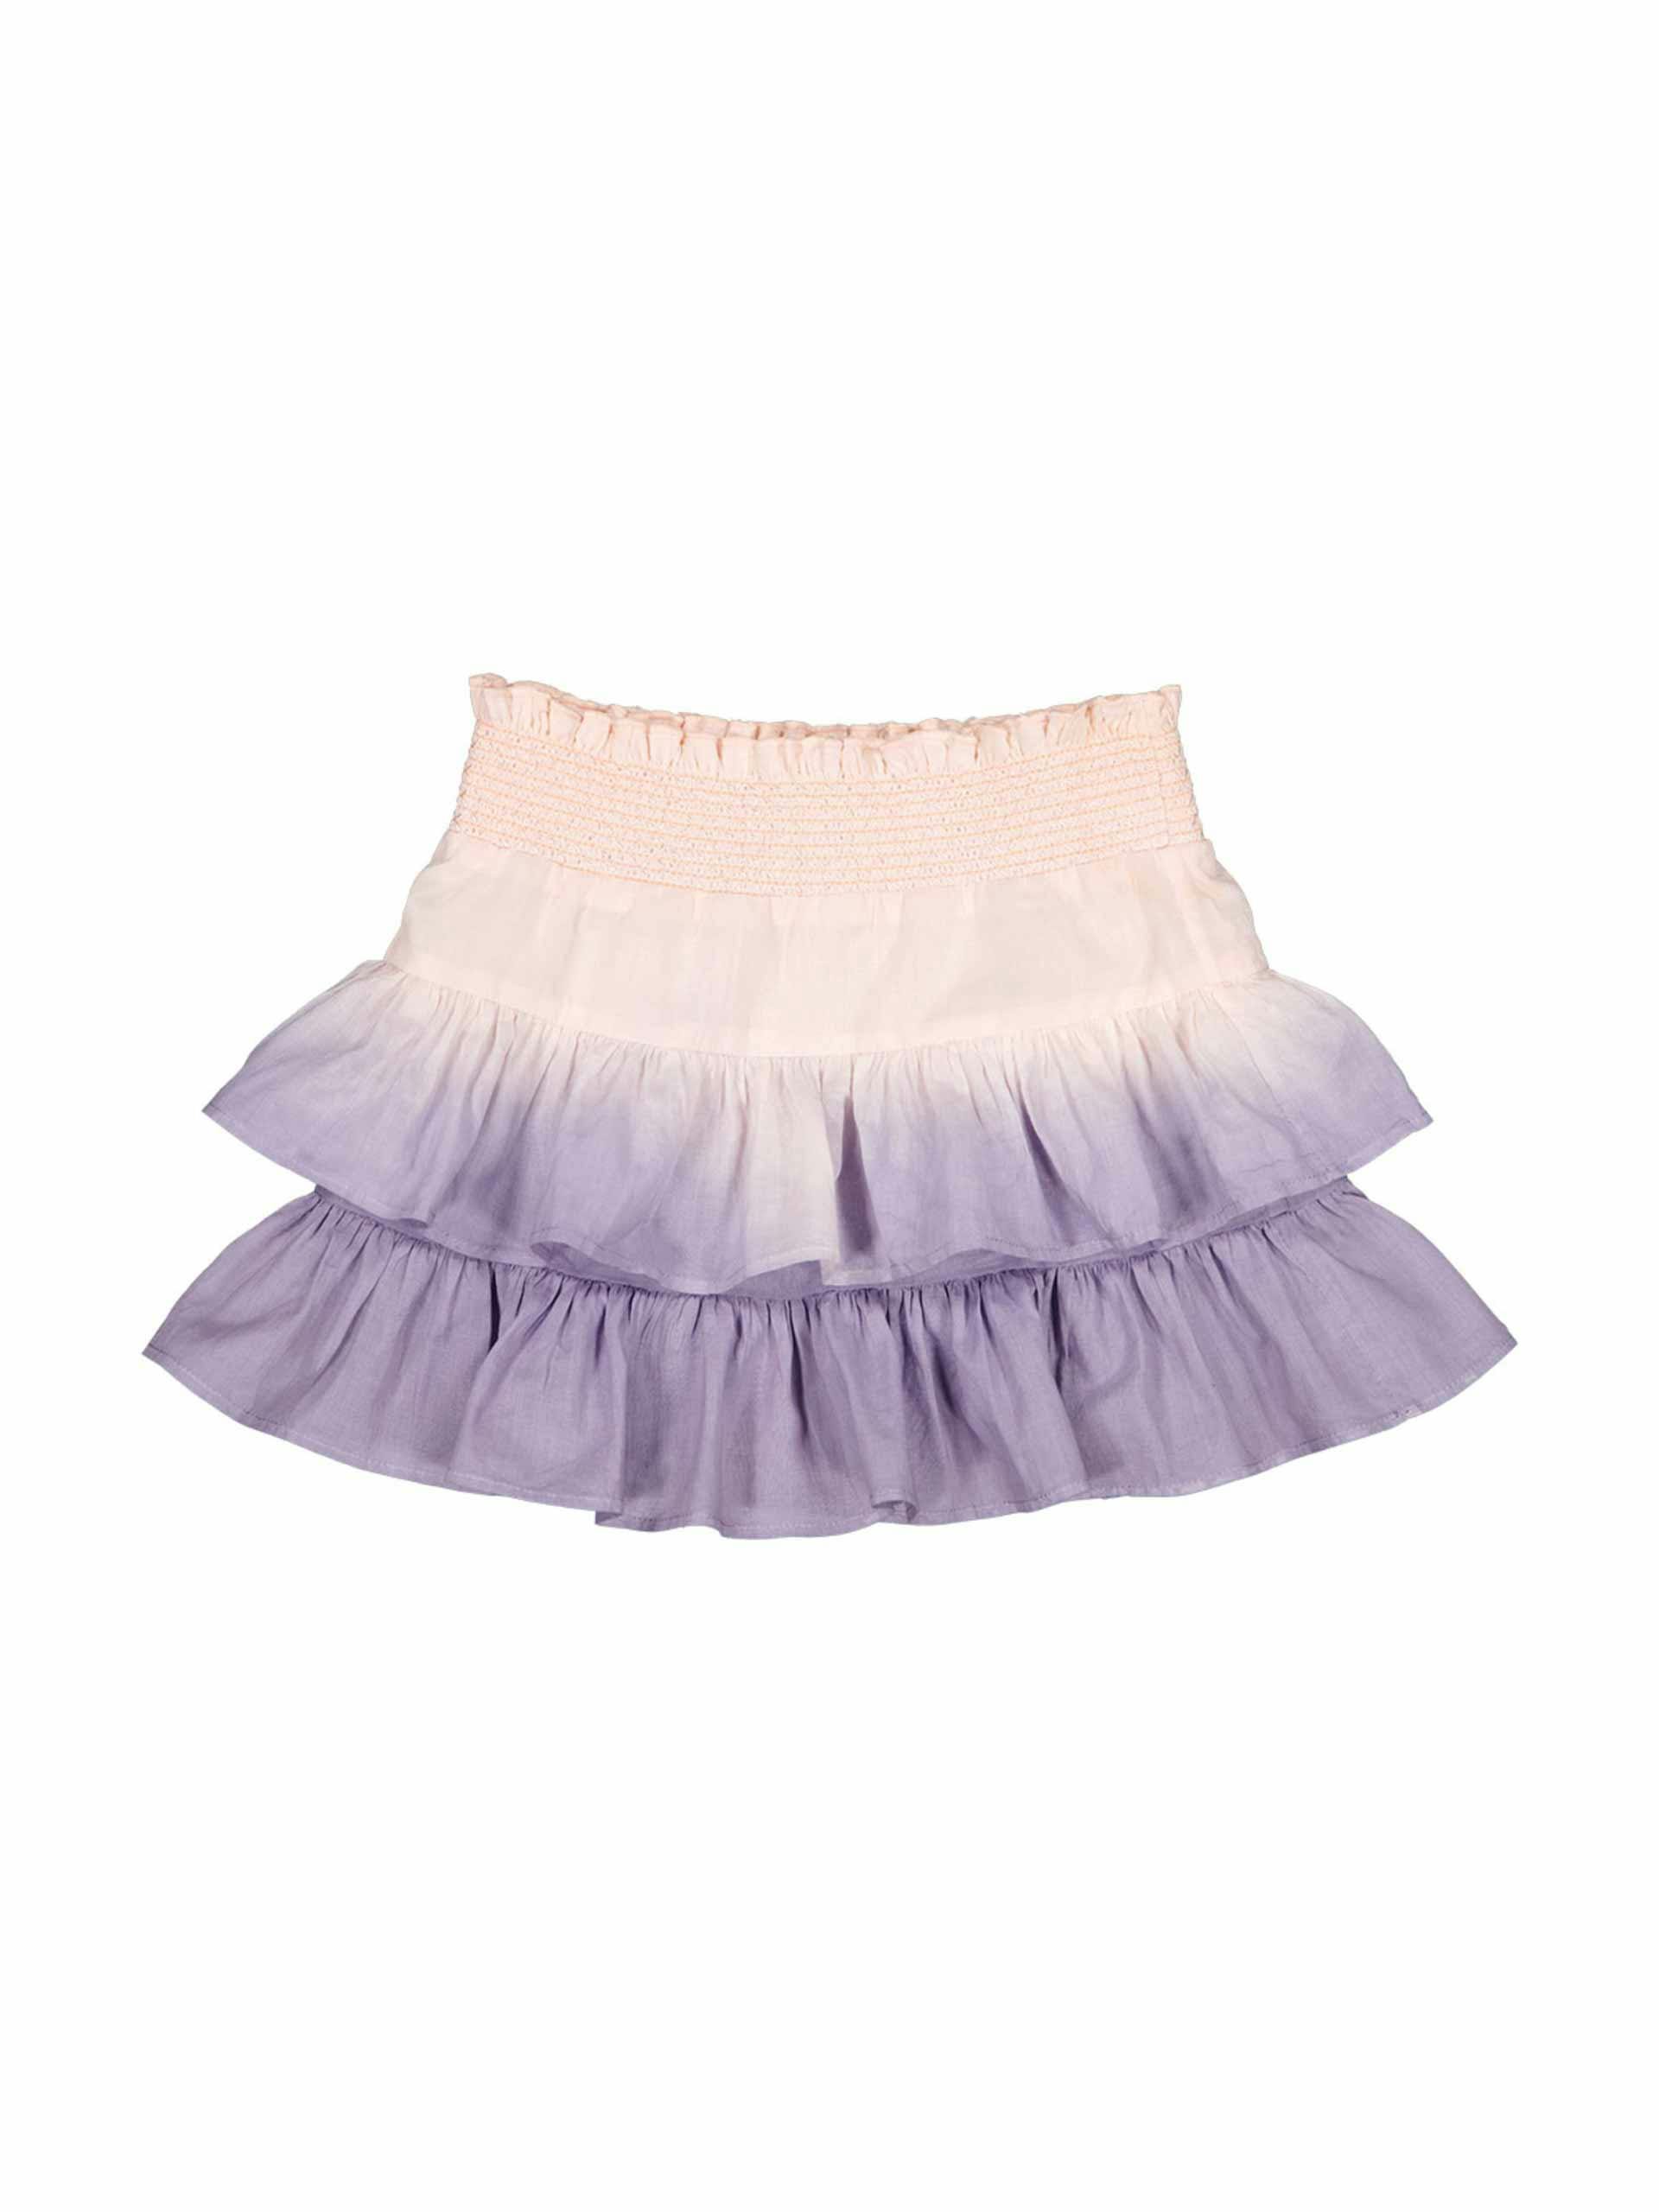 Tie-dye frilly skirt